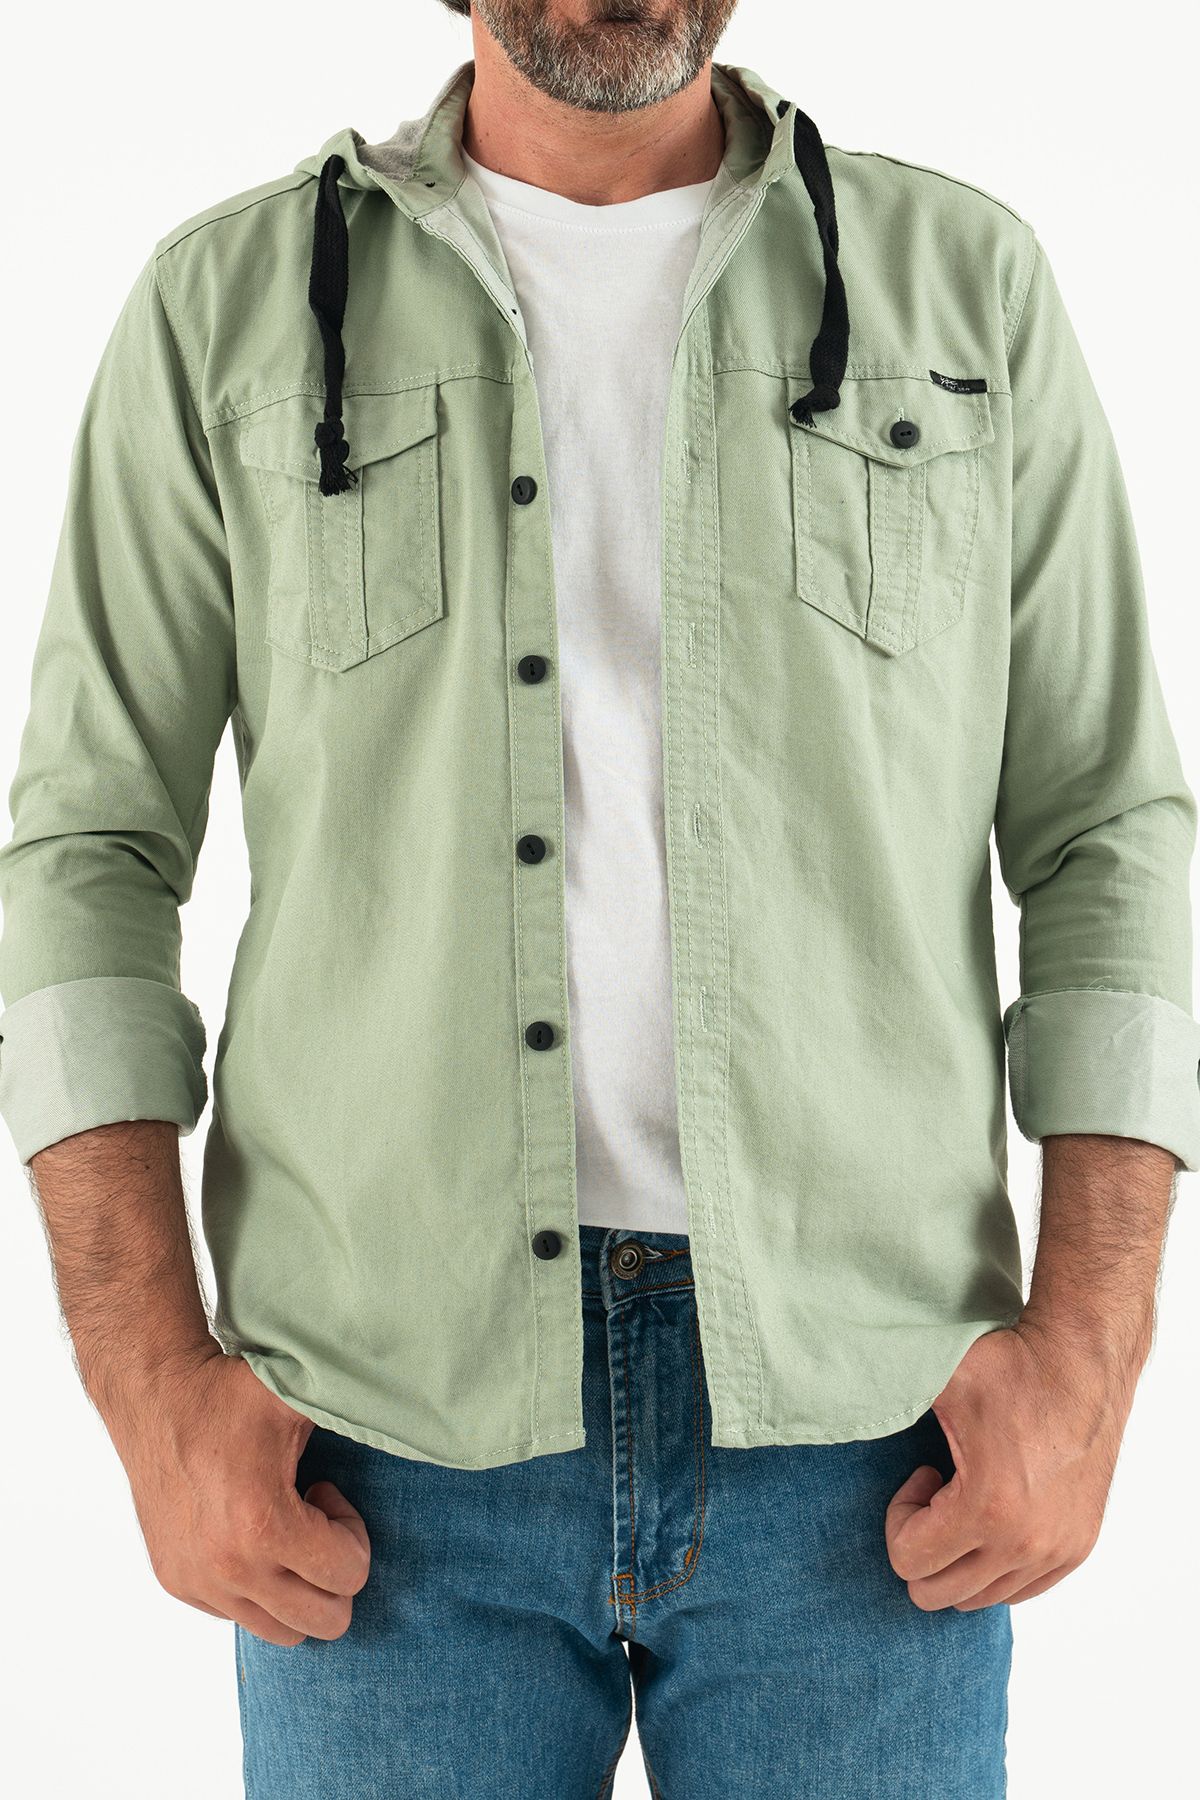 YXC Trend Maker Erkek Su Yeşili Slim Fit Dar Kalıp Kapüşonlu Kot Gömlek